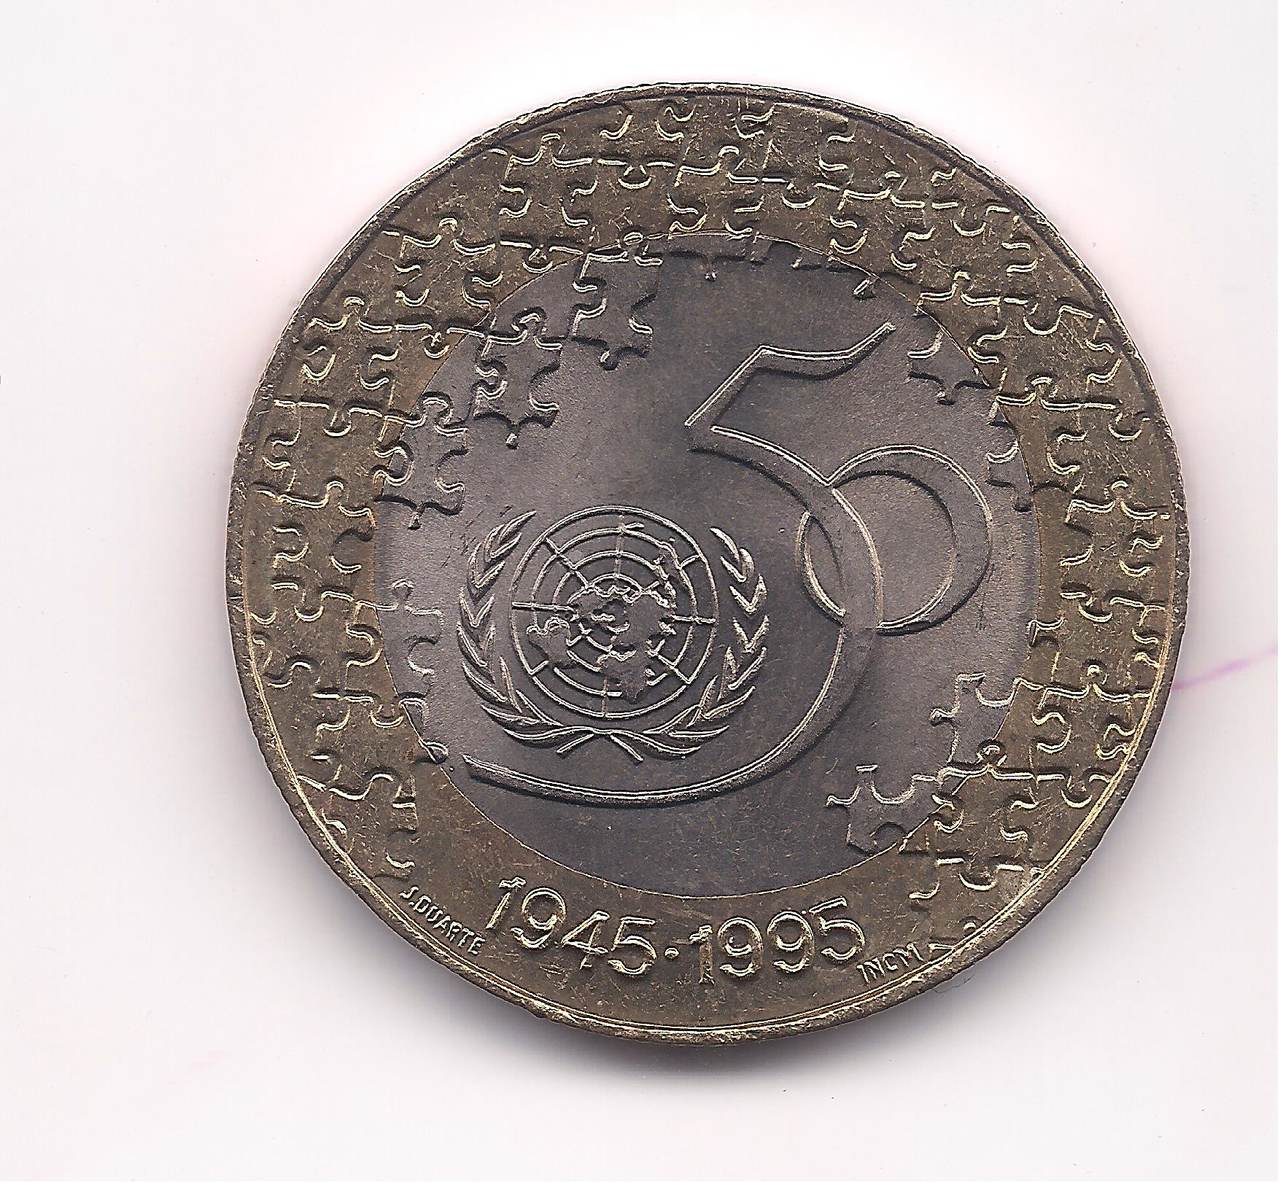 República Portuguesa - 200 escudos 1995